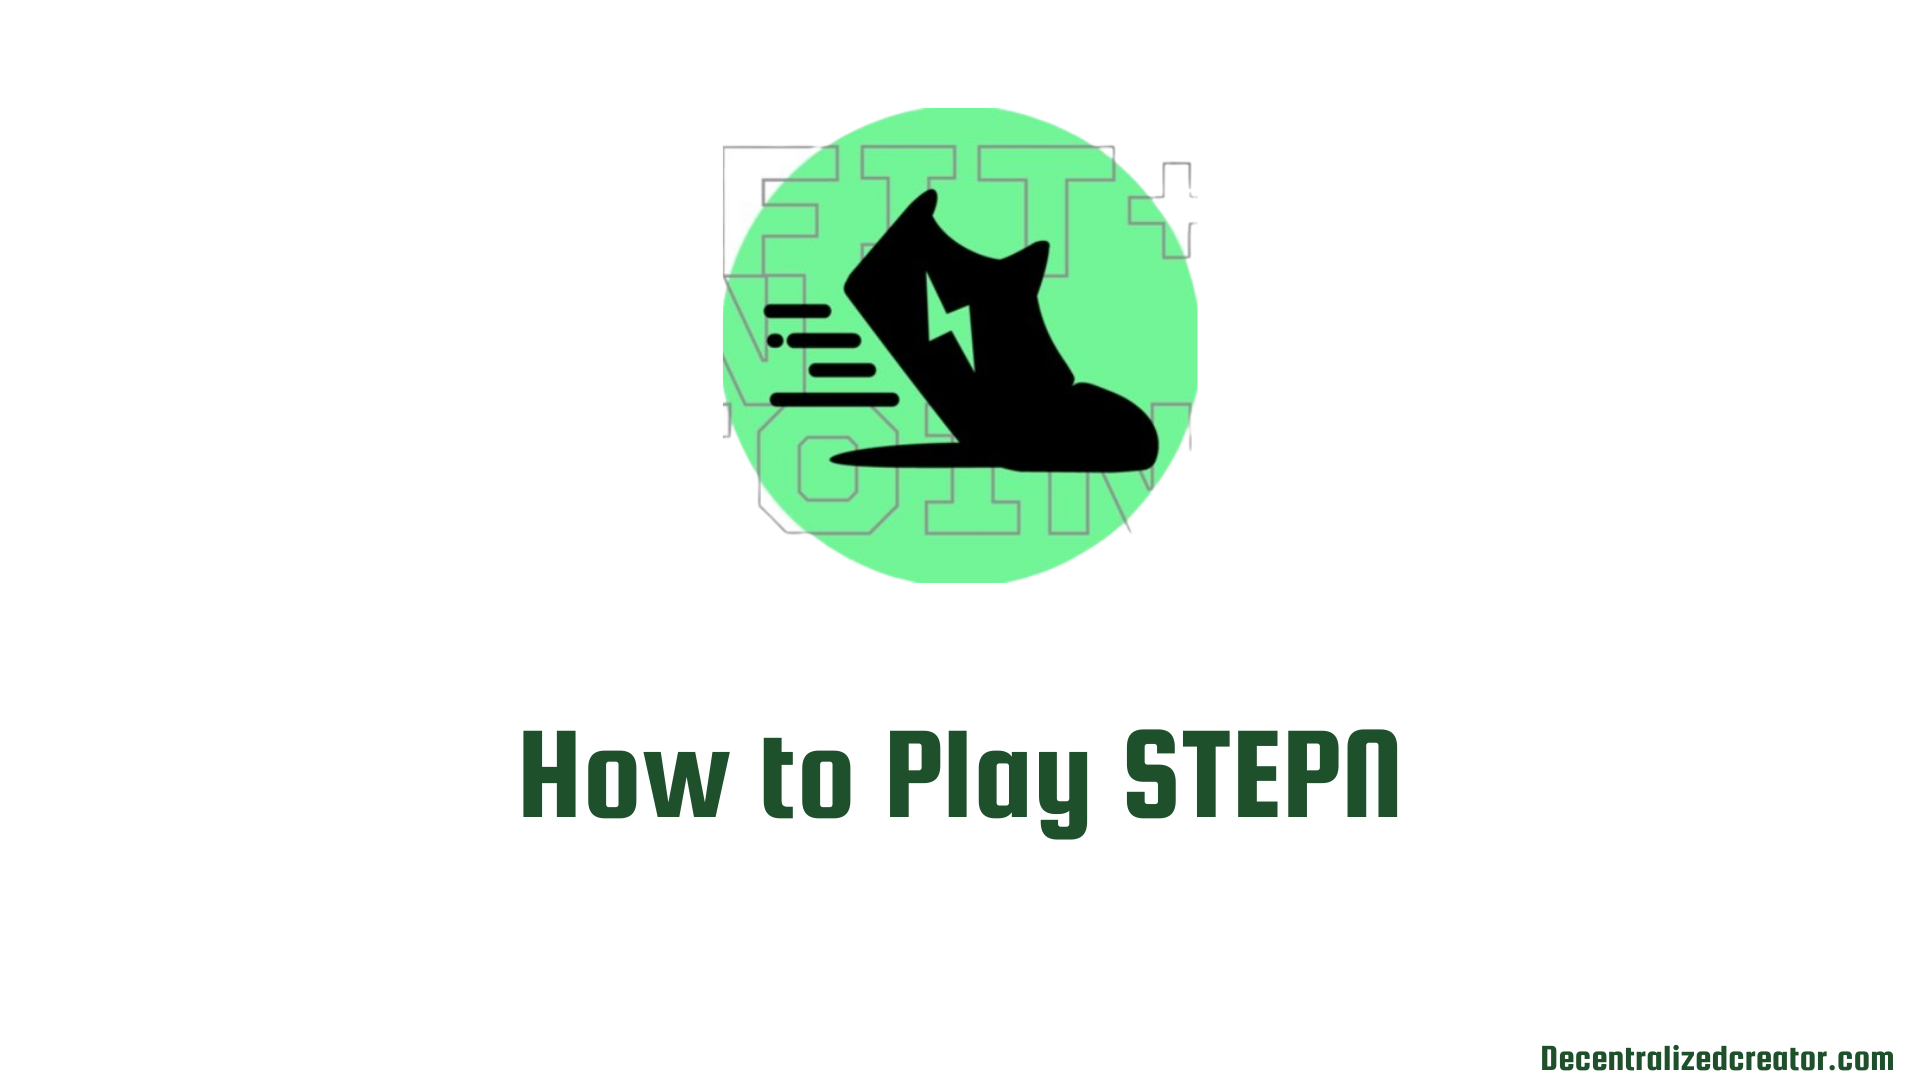 Stepn market. Stepn activation code. Код активации stepn. Stepn logo. Stepn Скриншоты.